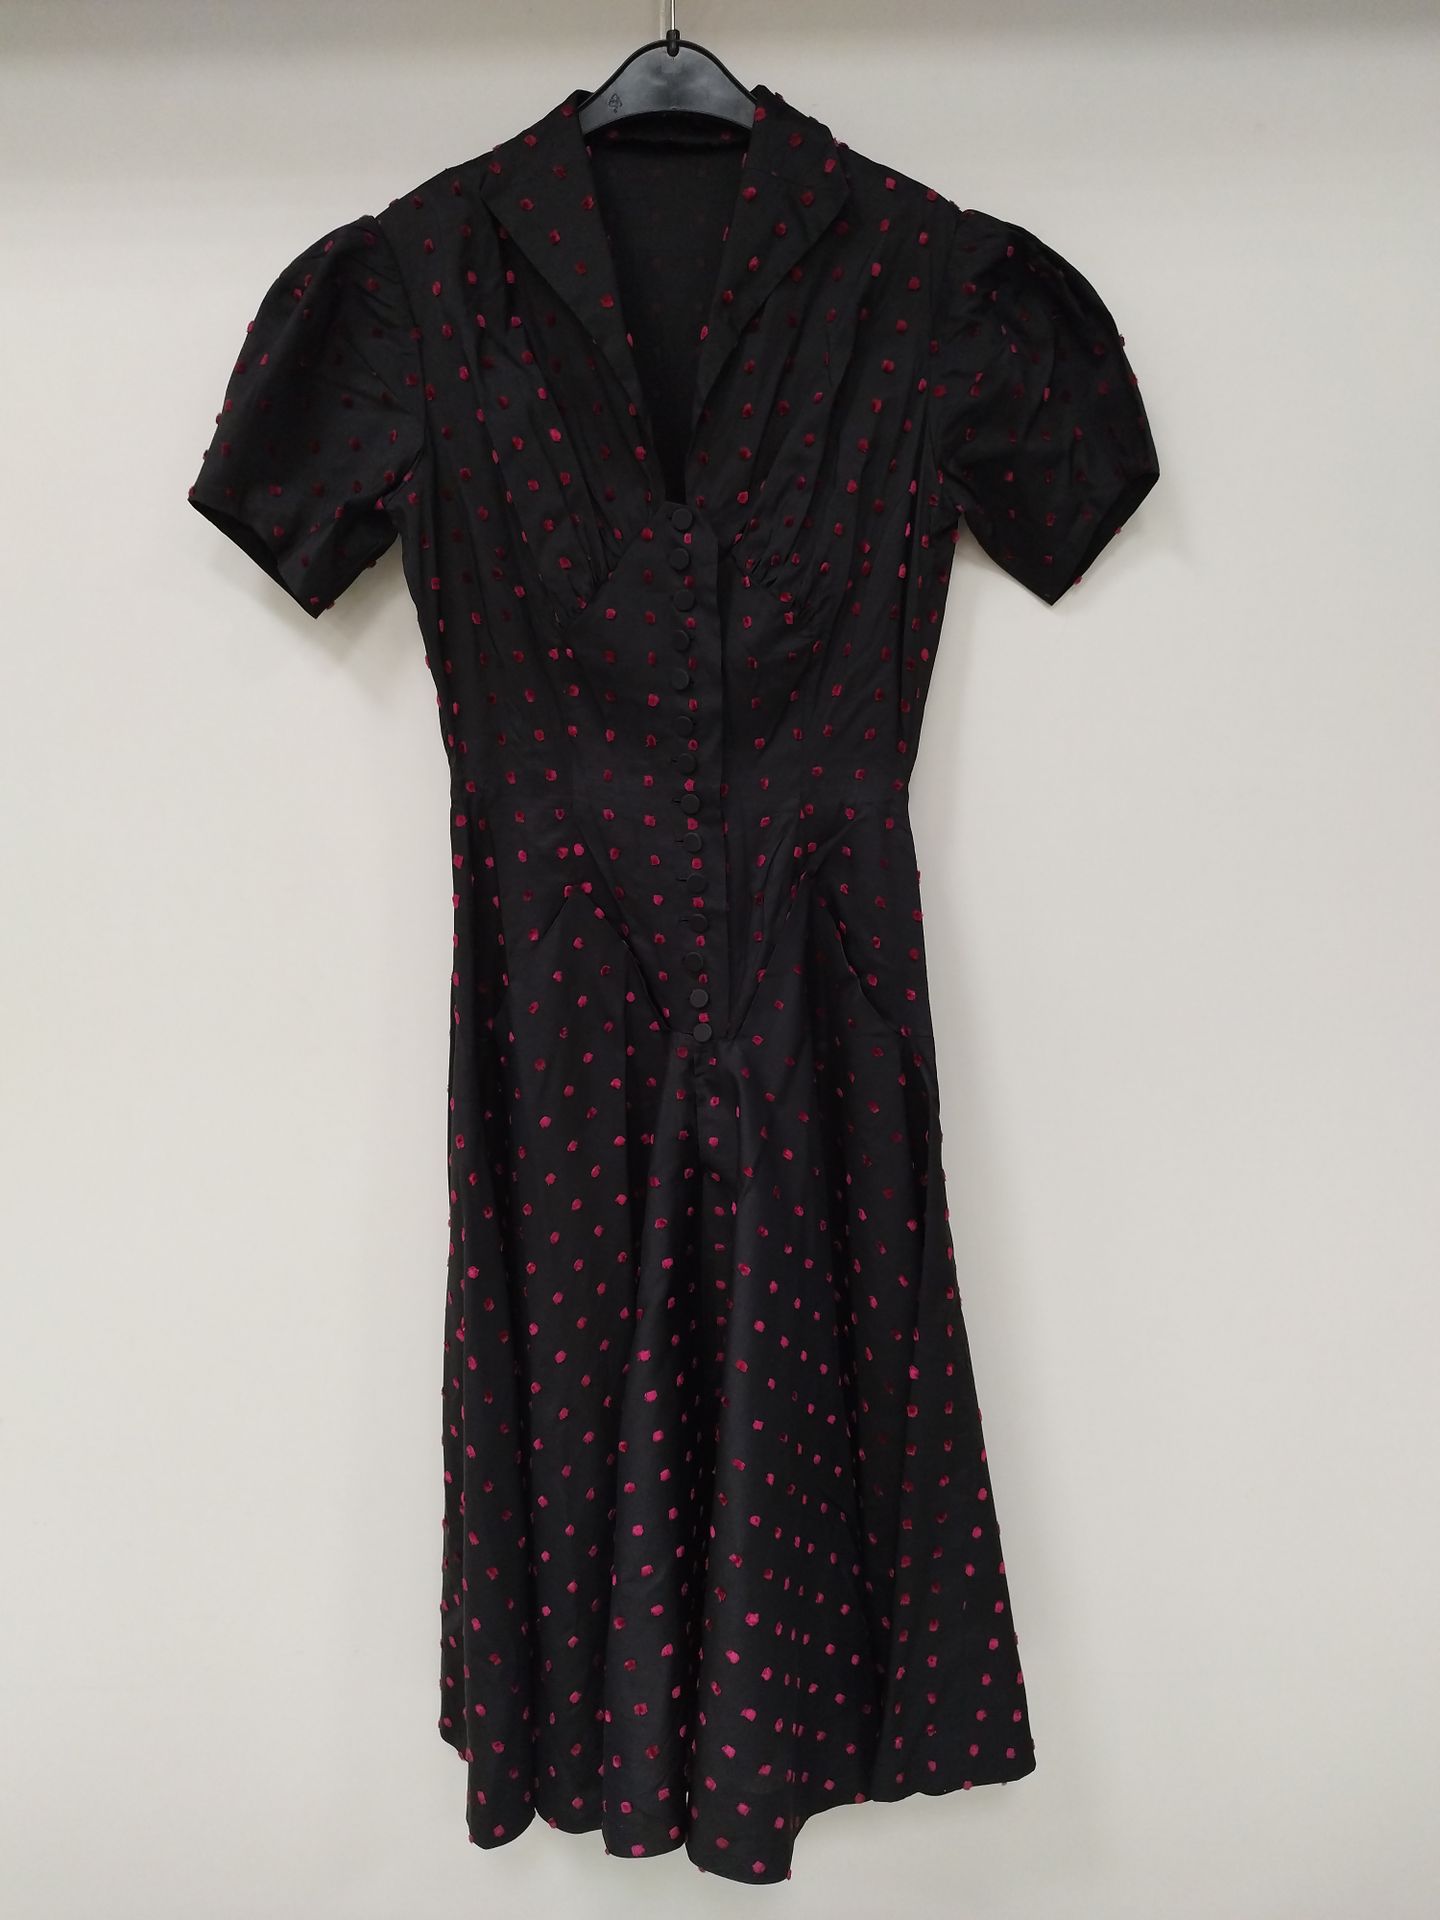 Null HENRY

Black short sleeve midi dress with pink velvet dots

50's inspiratio&hellip;